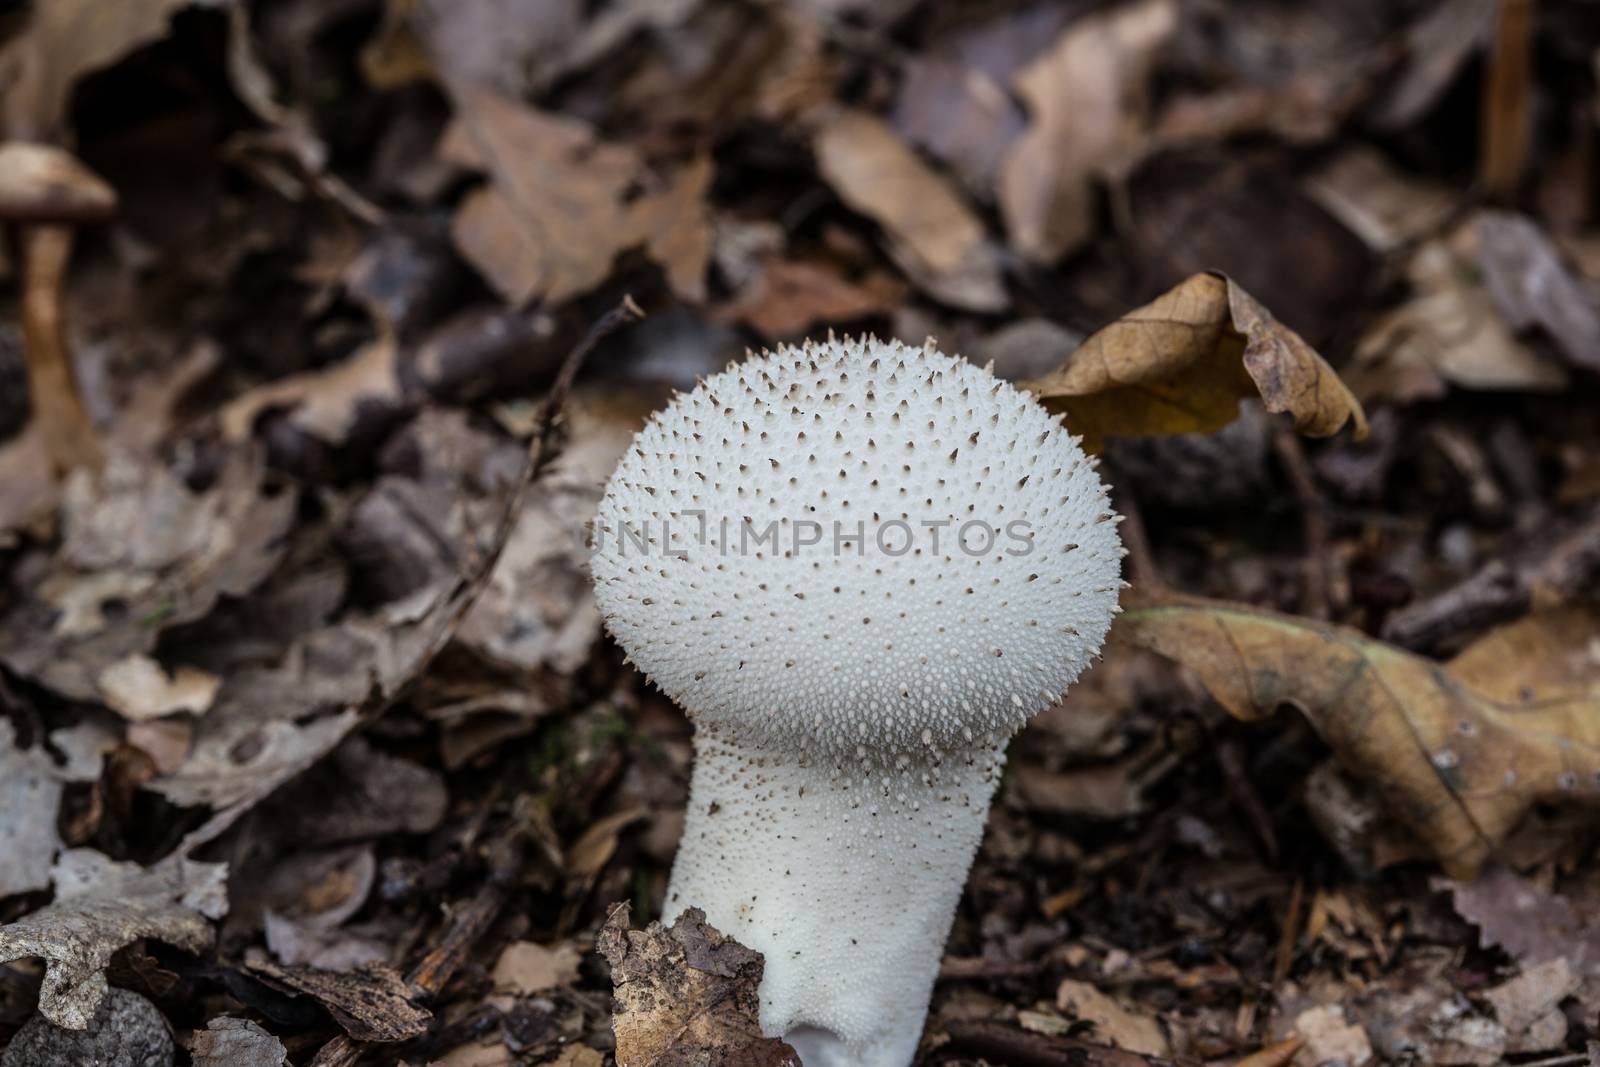 tasty edible mushroom on forest floor by Dr-Lange